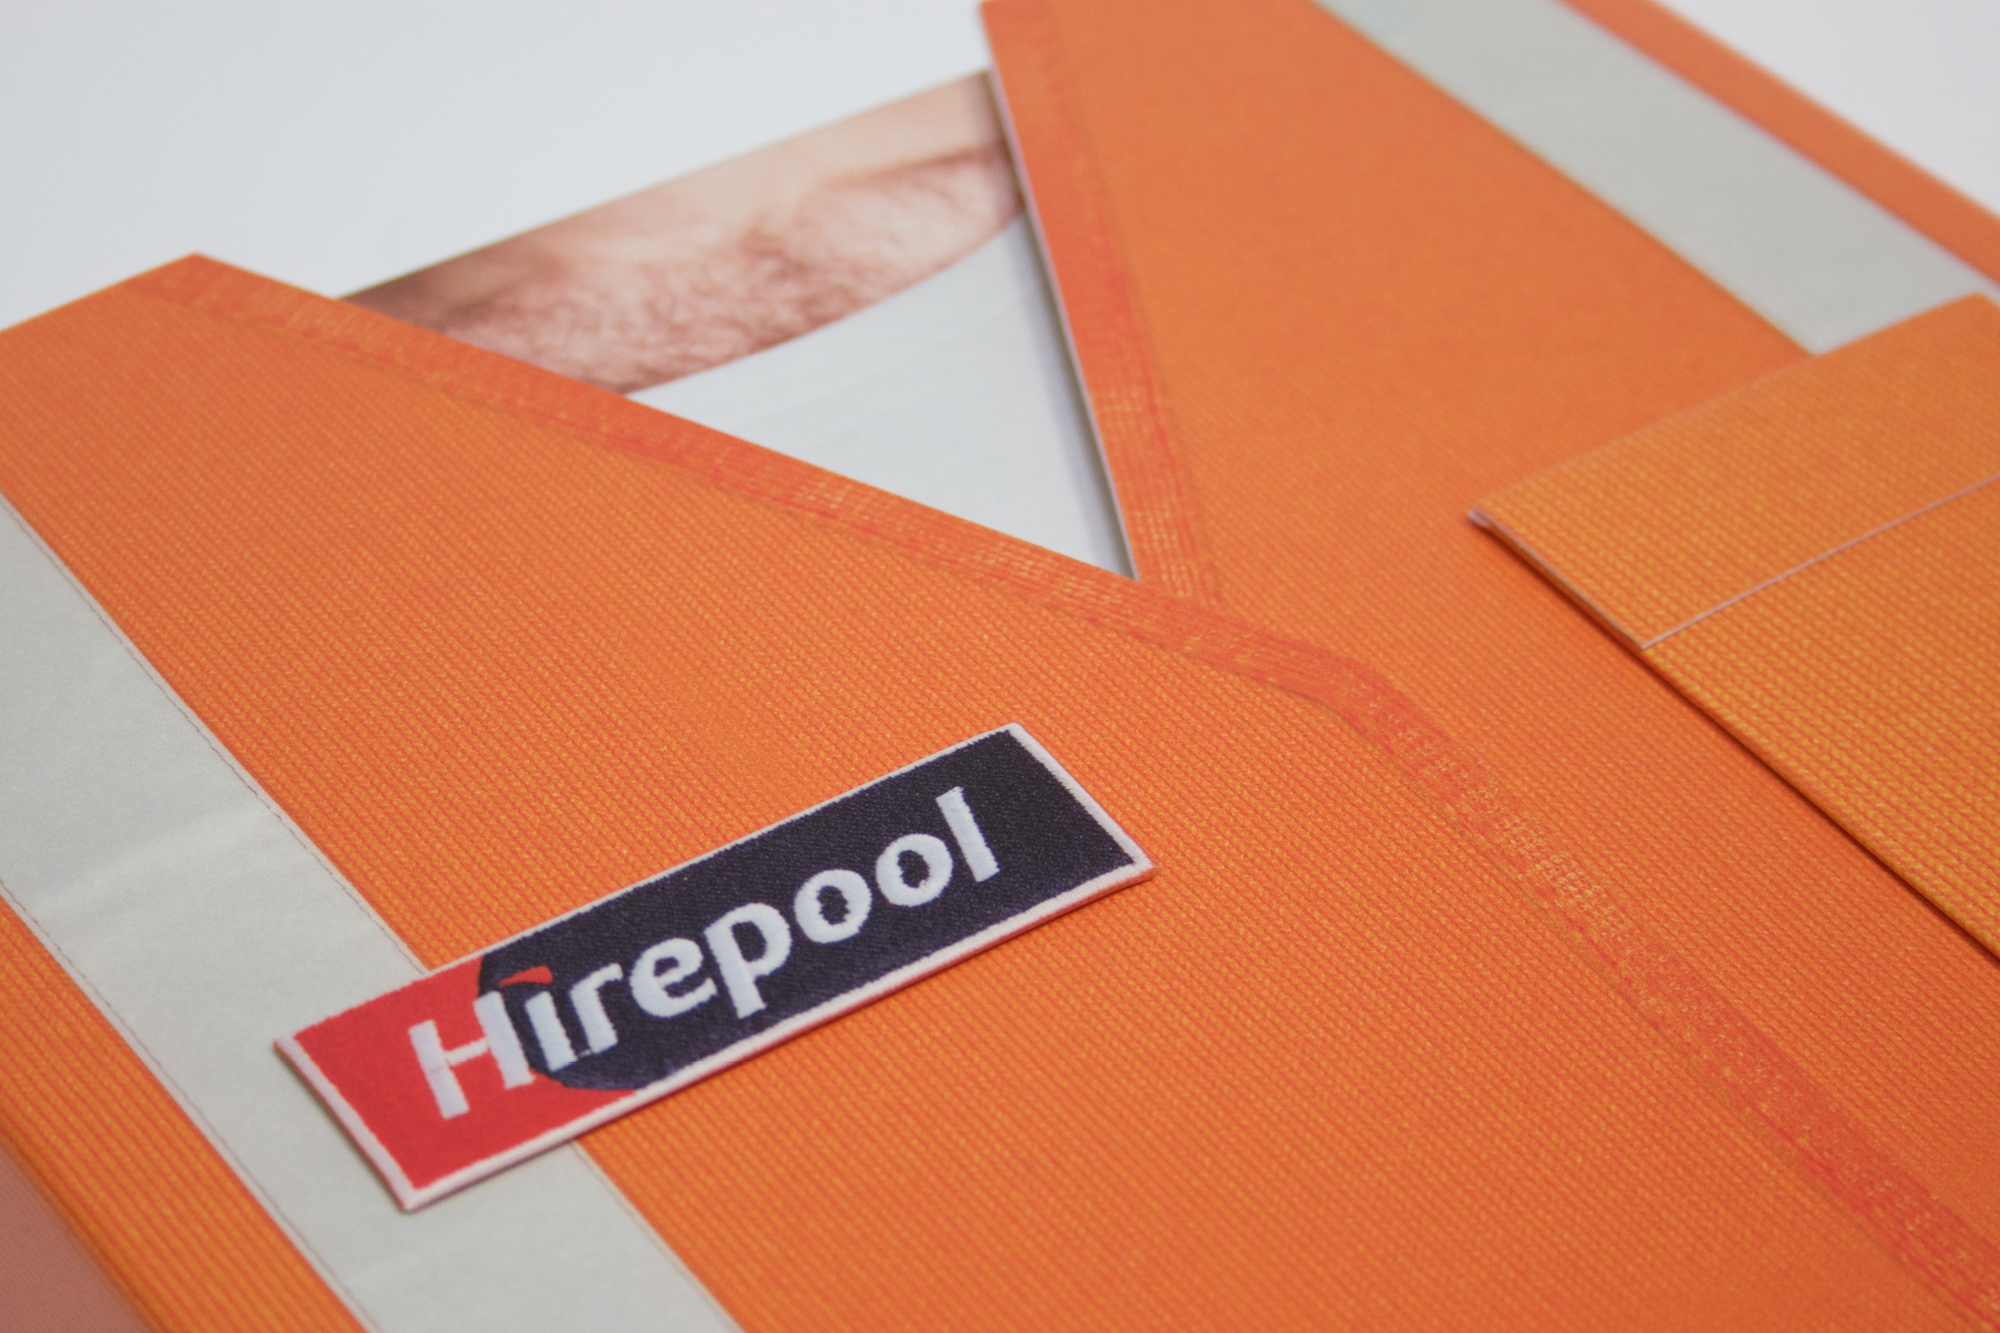 onfire design hirepool tropical getaway packaging design 2